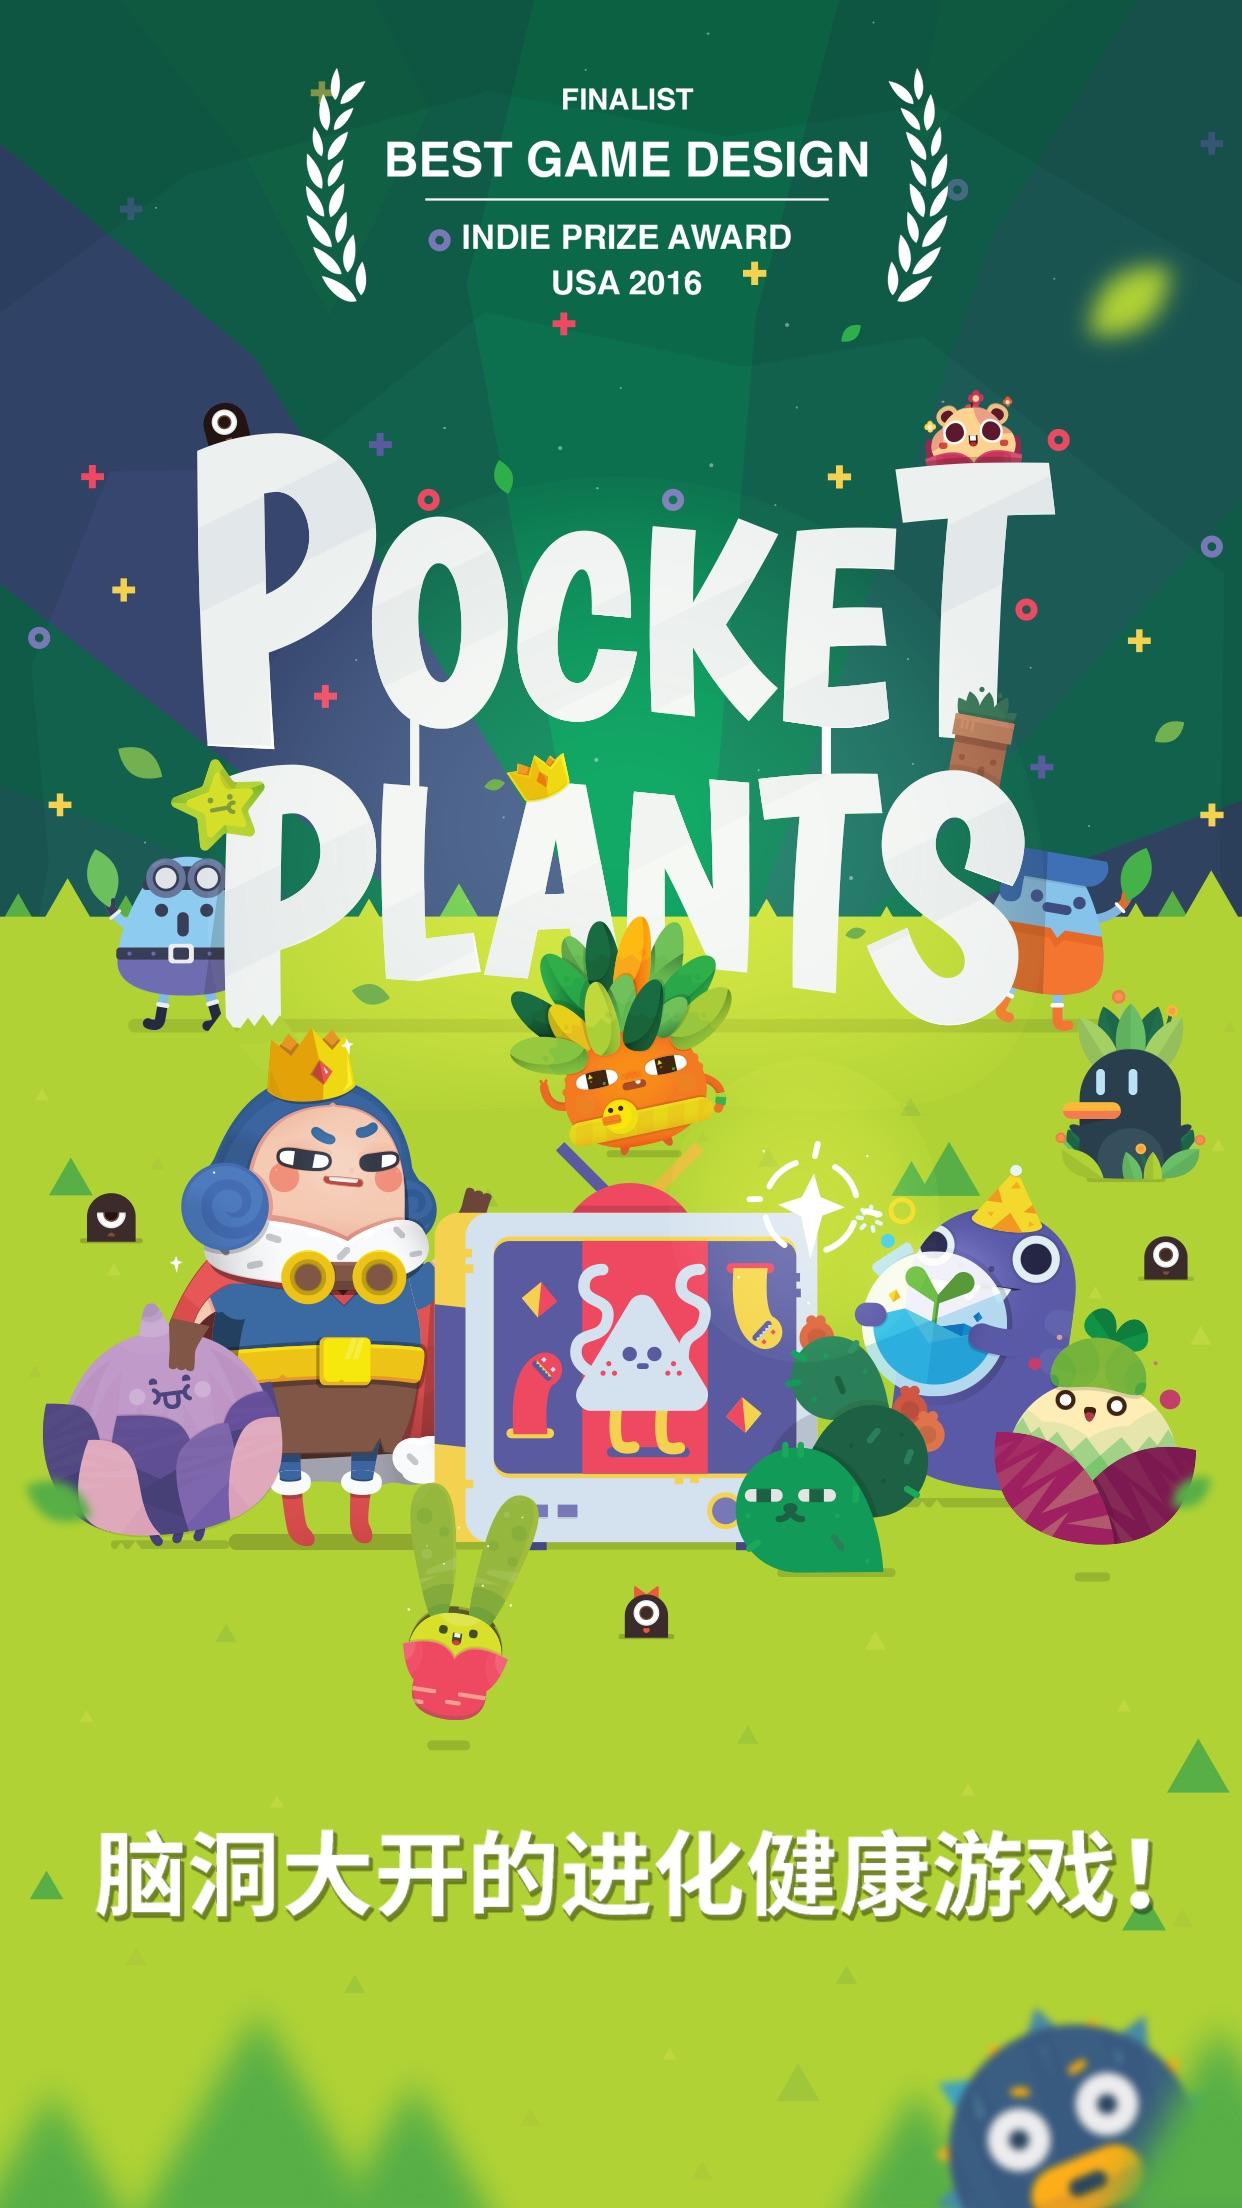 Screenshot 1 of Pocket Plants: Уютная игра с растениями 2.10.6